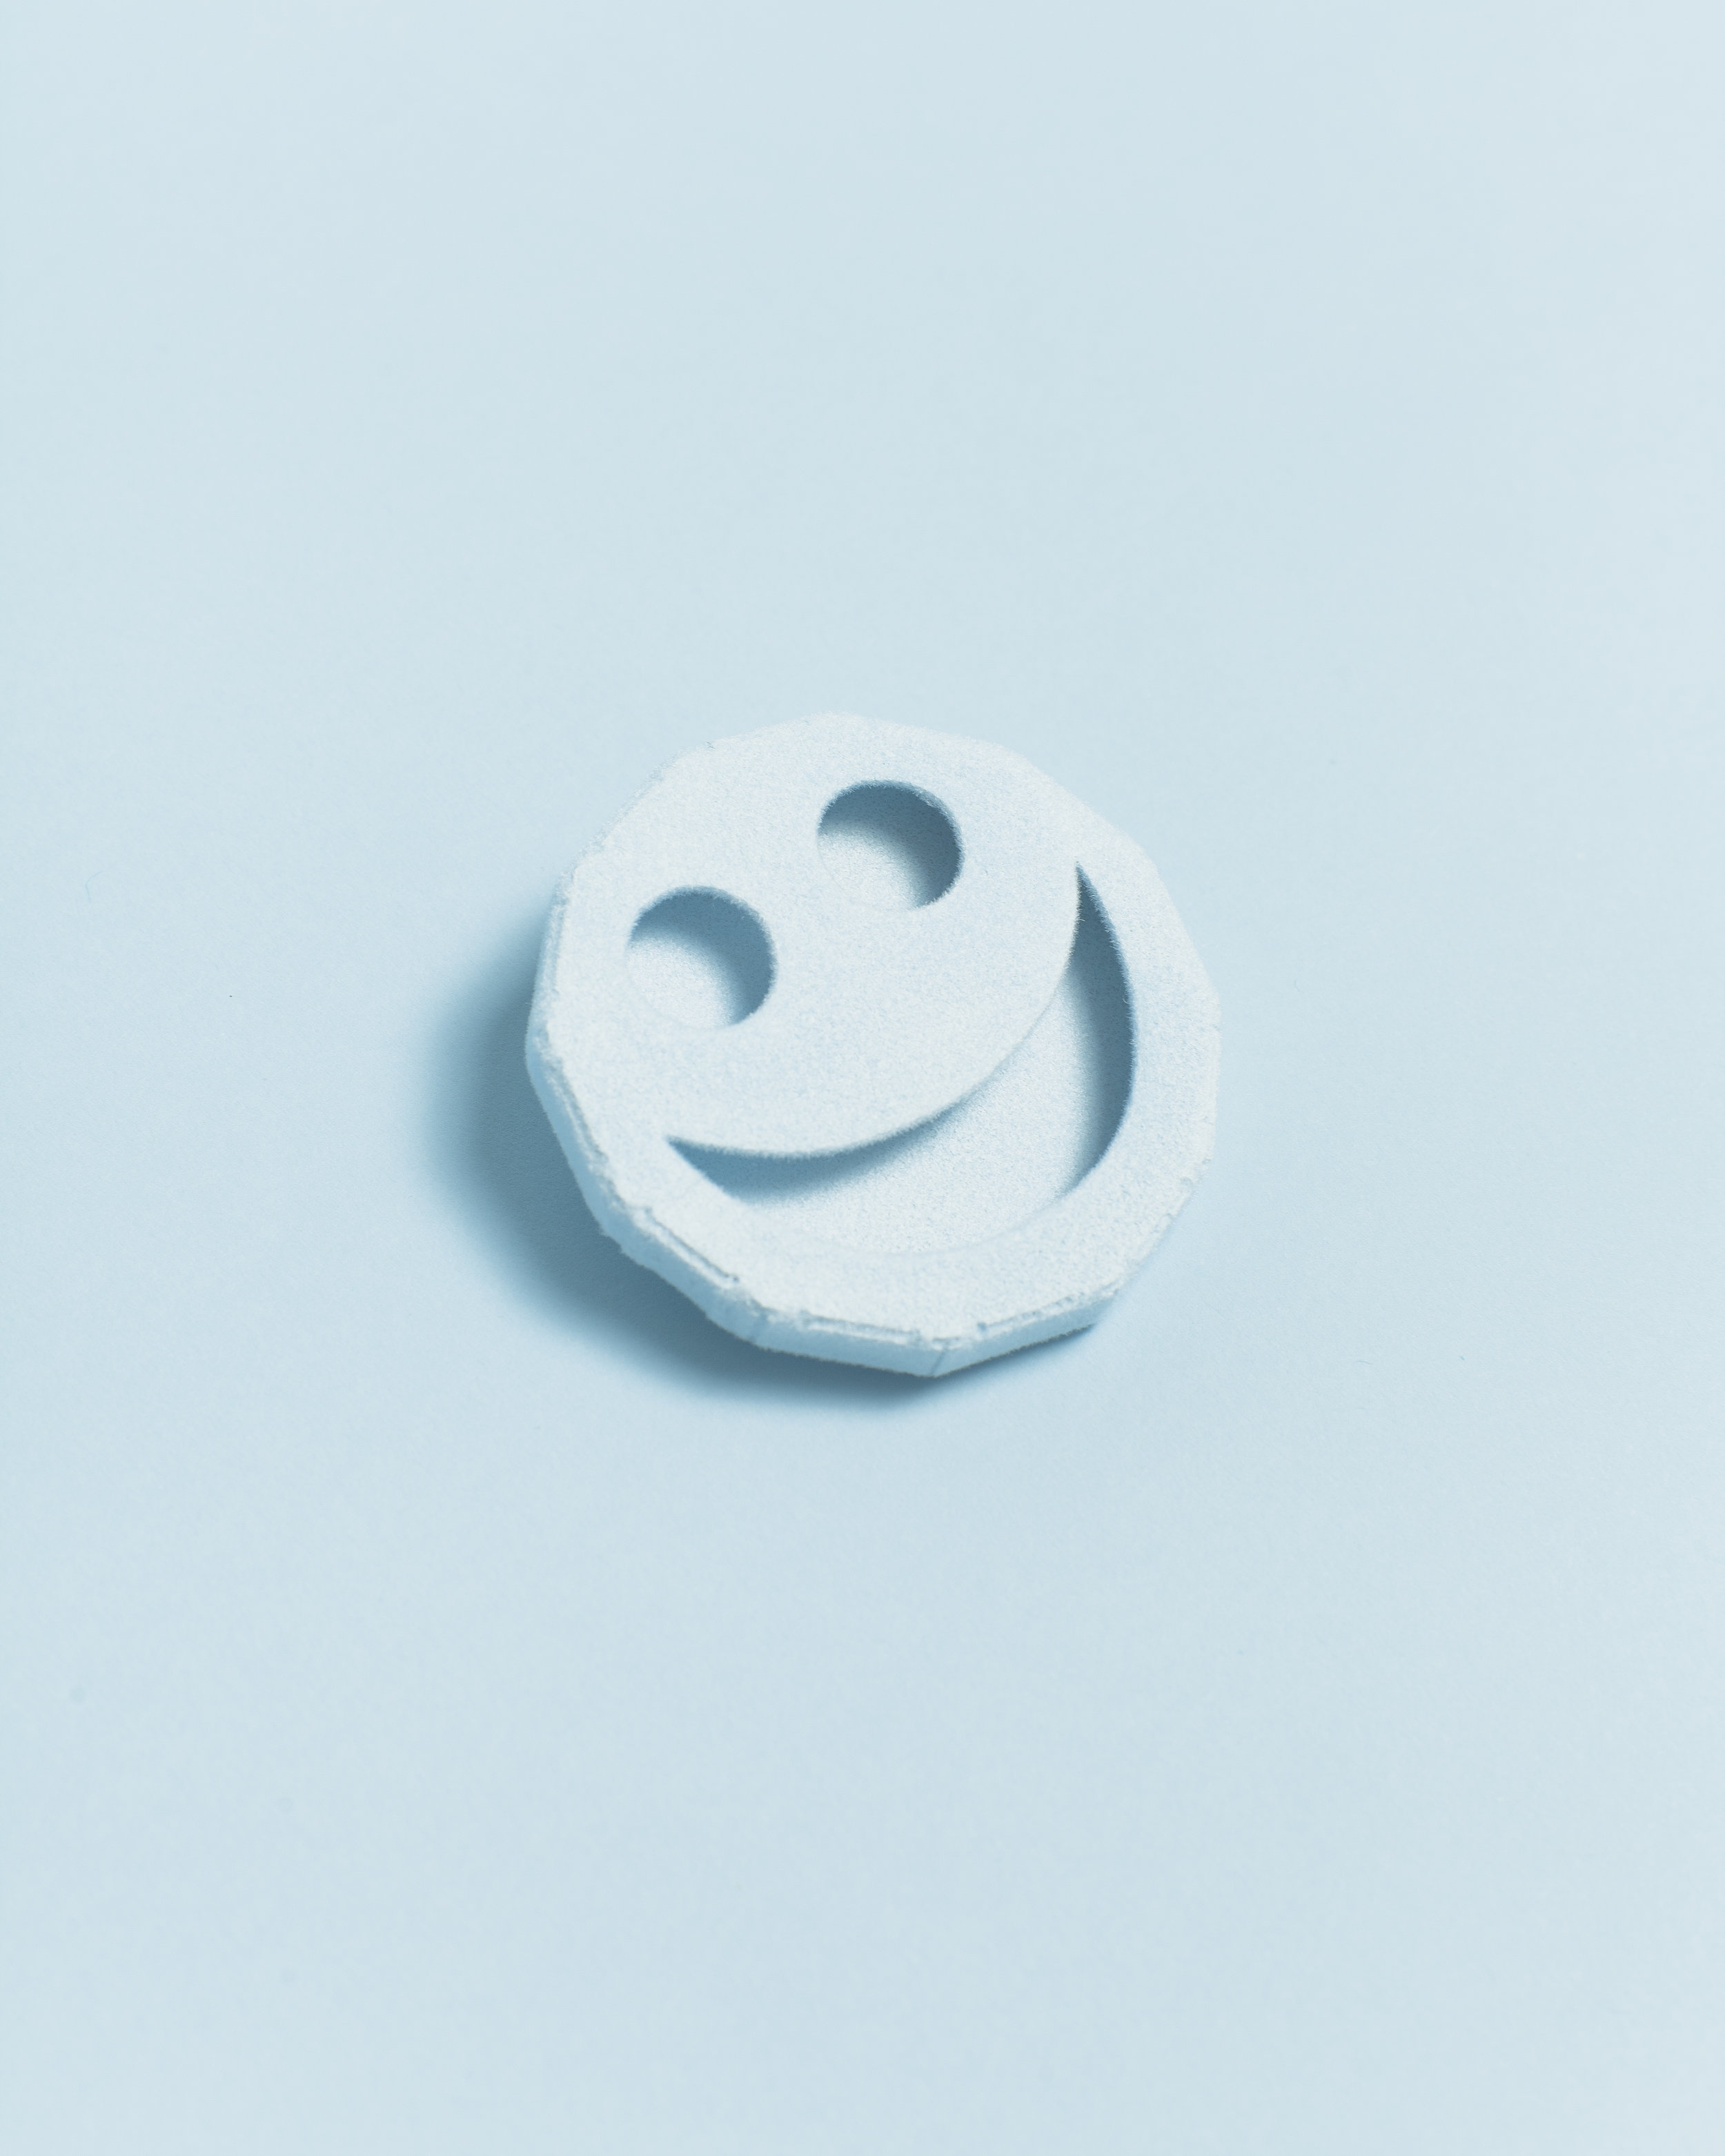   Fuzzy Smile Symbol Pin   Brass, Nickel, Paint, Flocking  2”x2”x.5”  (Baby Blue, Light Grey)    Photo by Harry Gould Harvey 